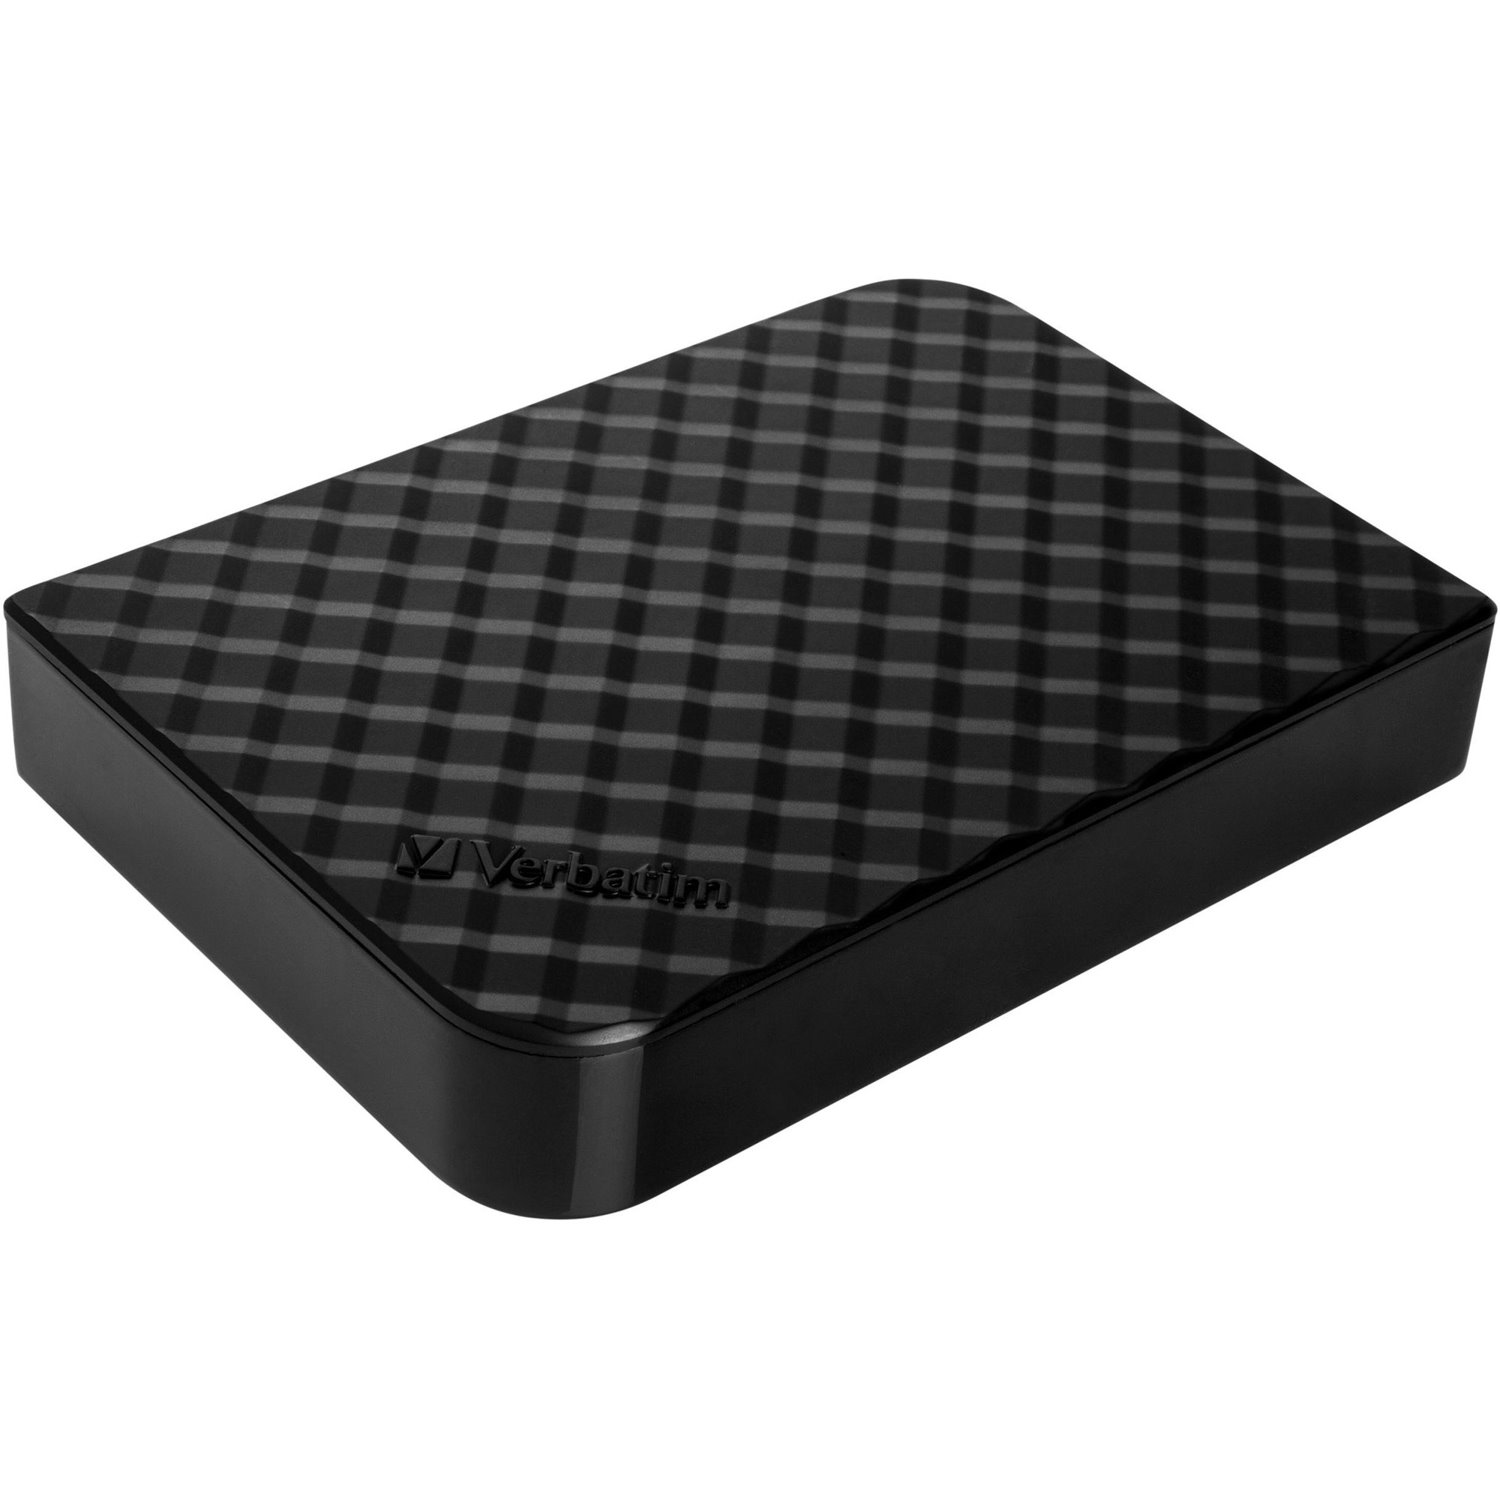 Verbatim 4TB Store 'n' Save Desktop Hard Drive, USB 3.0 - Diamond Black